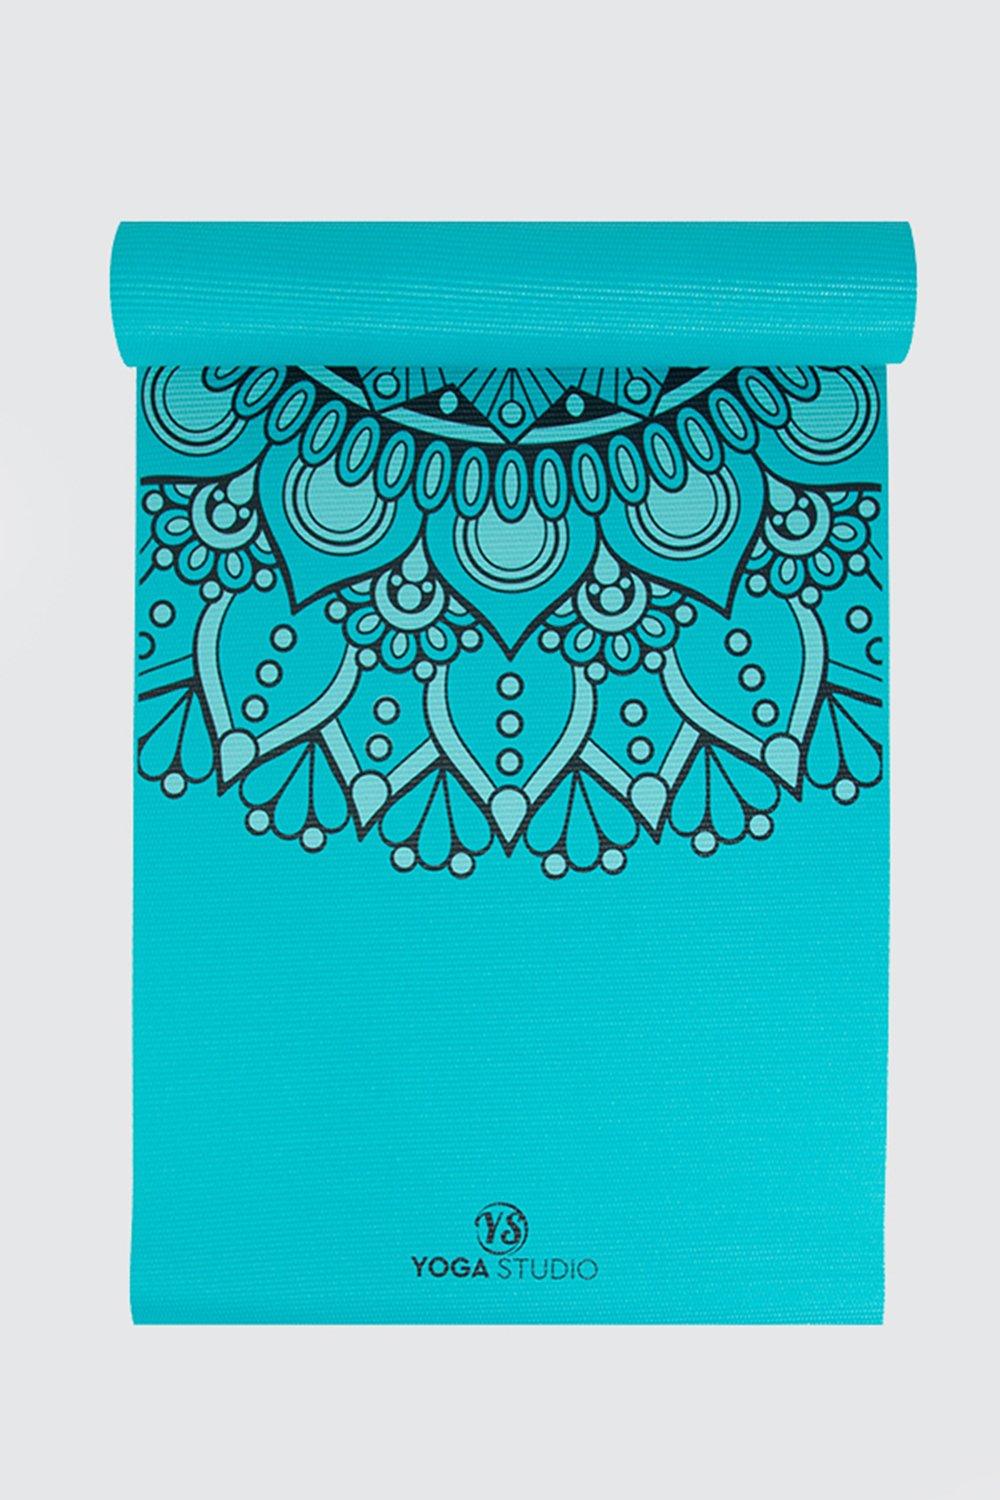 Yoga Studio Turquoise Mandala Designed Yoga Mat 6mm